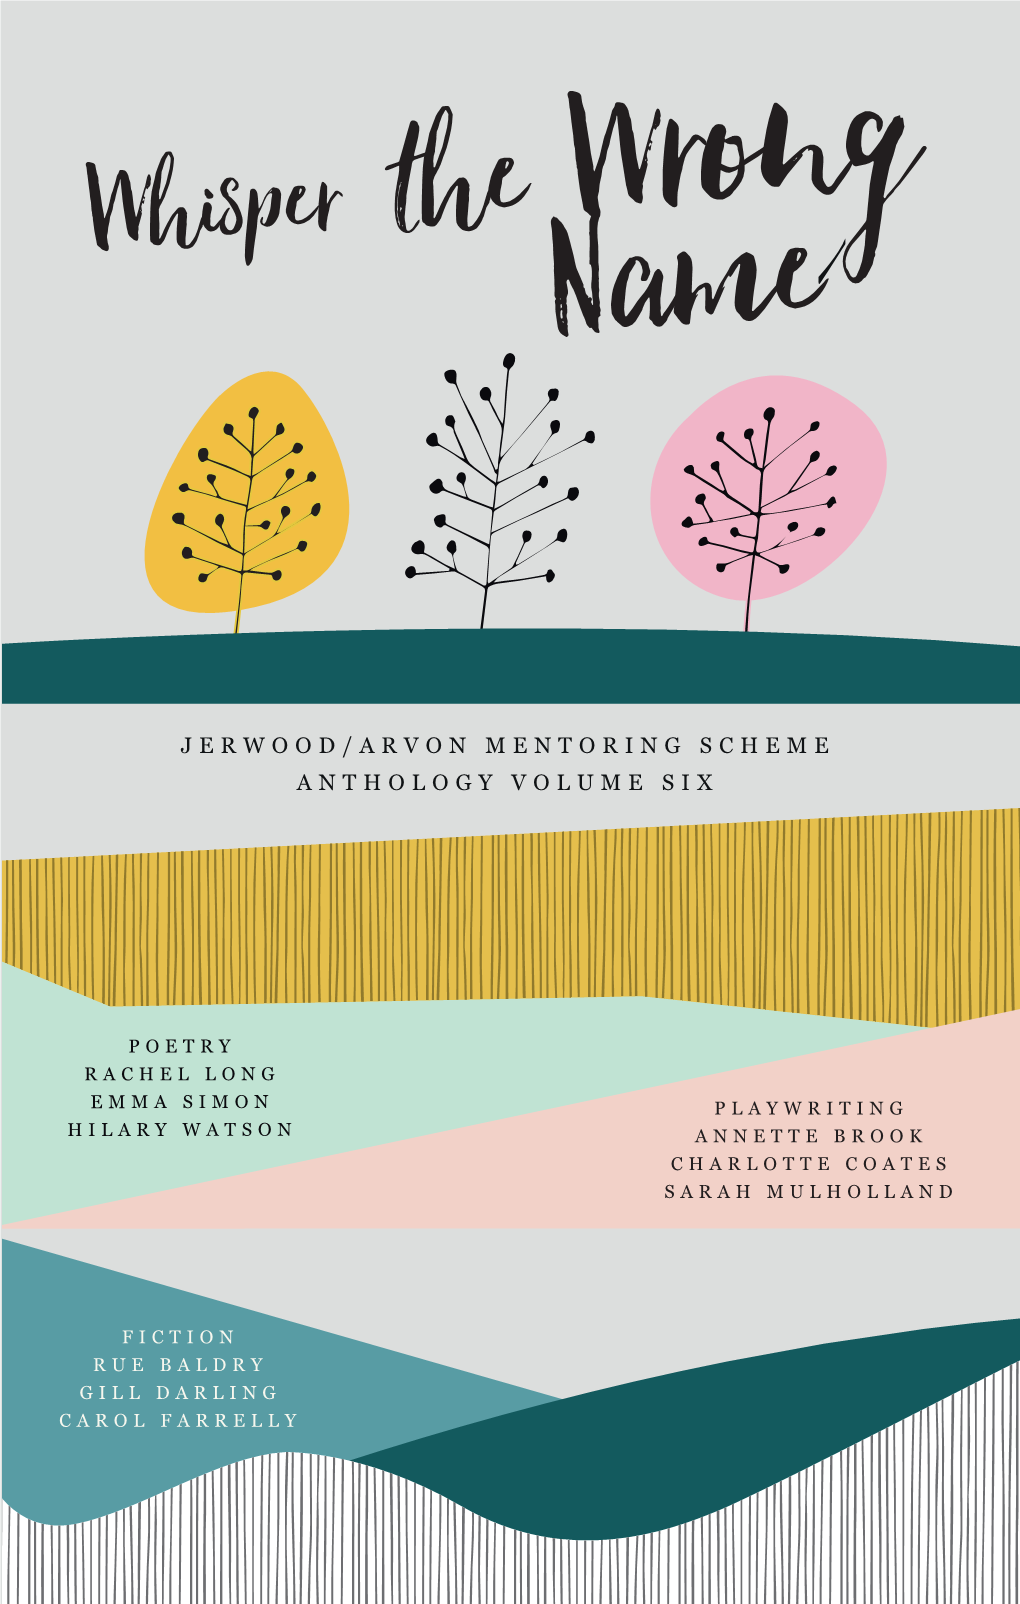 Jerwood/Arvon Mentoring Scheme Anthology Volume